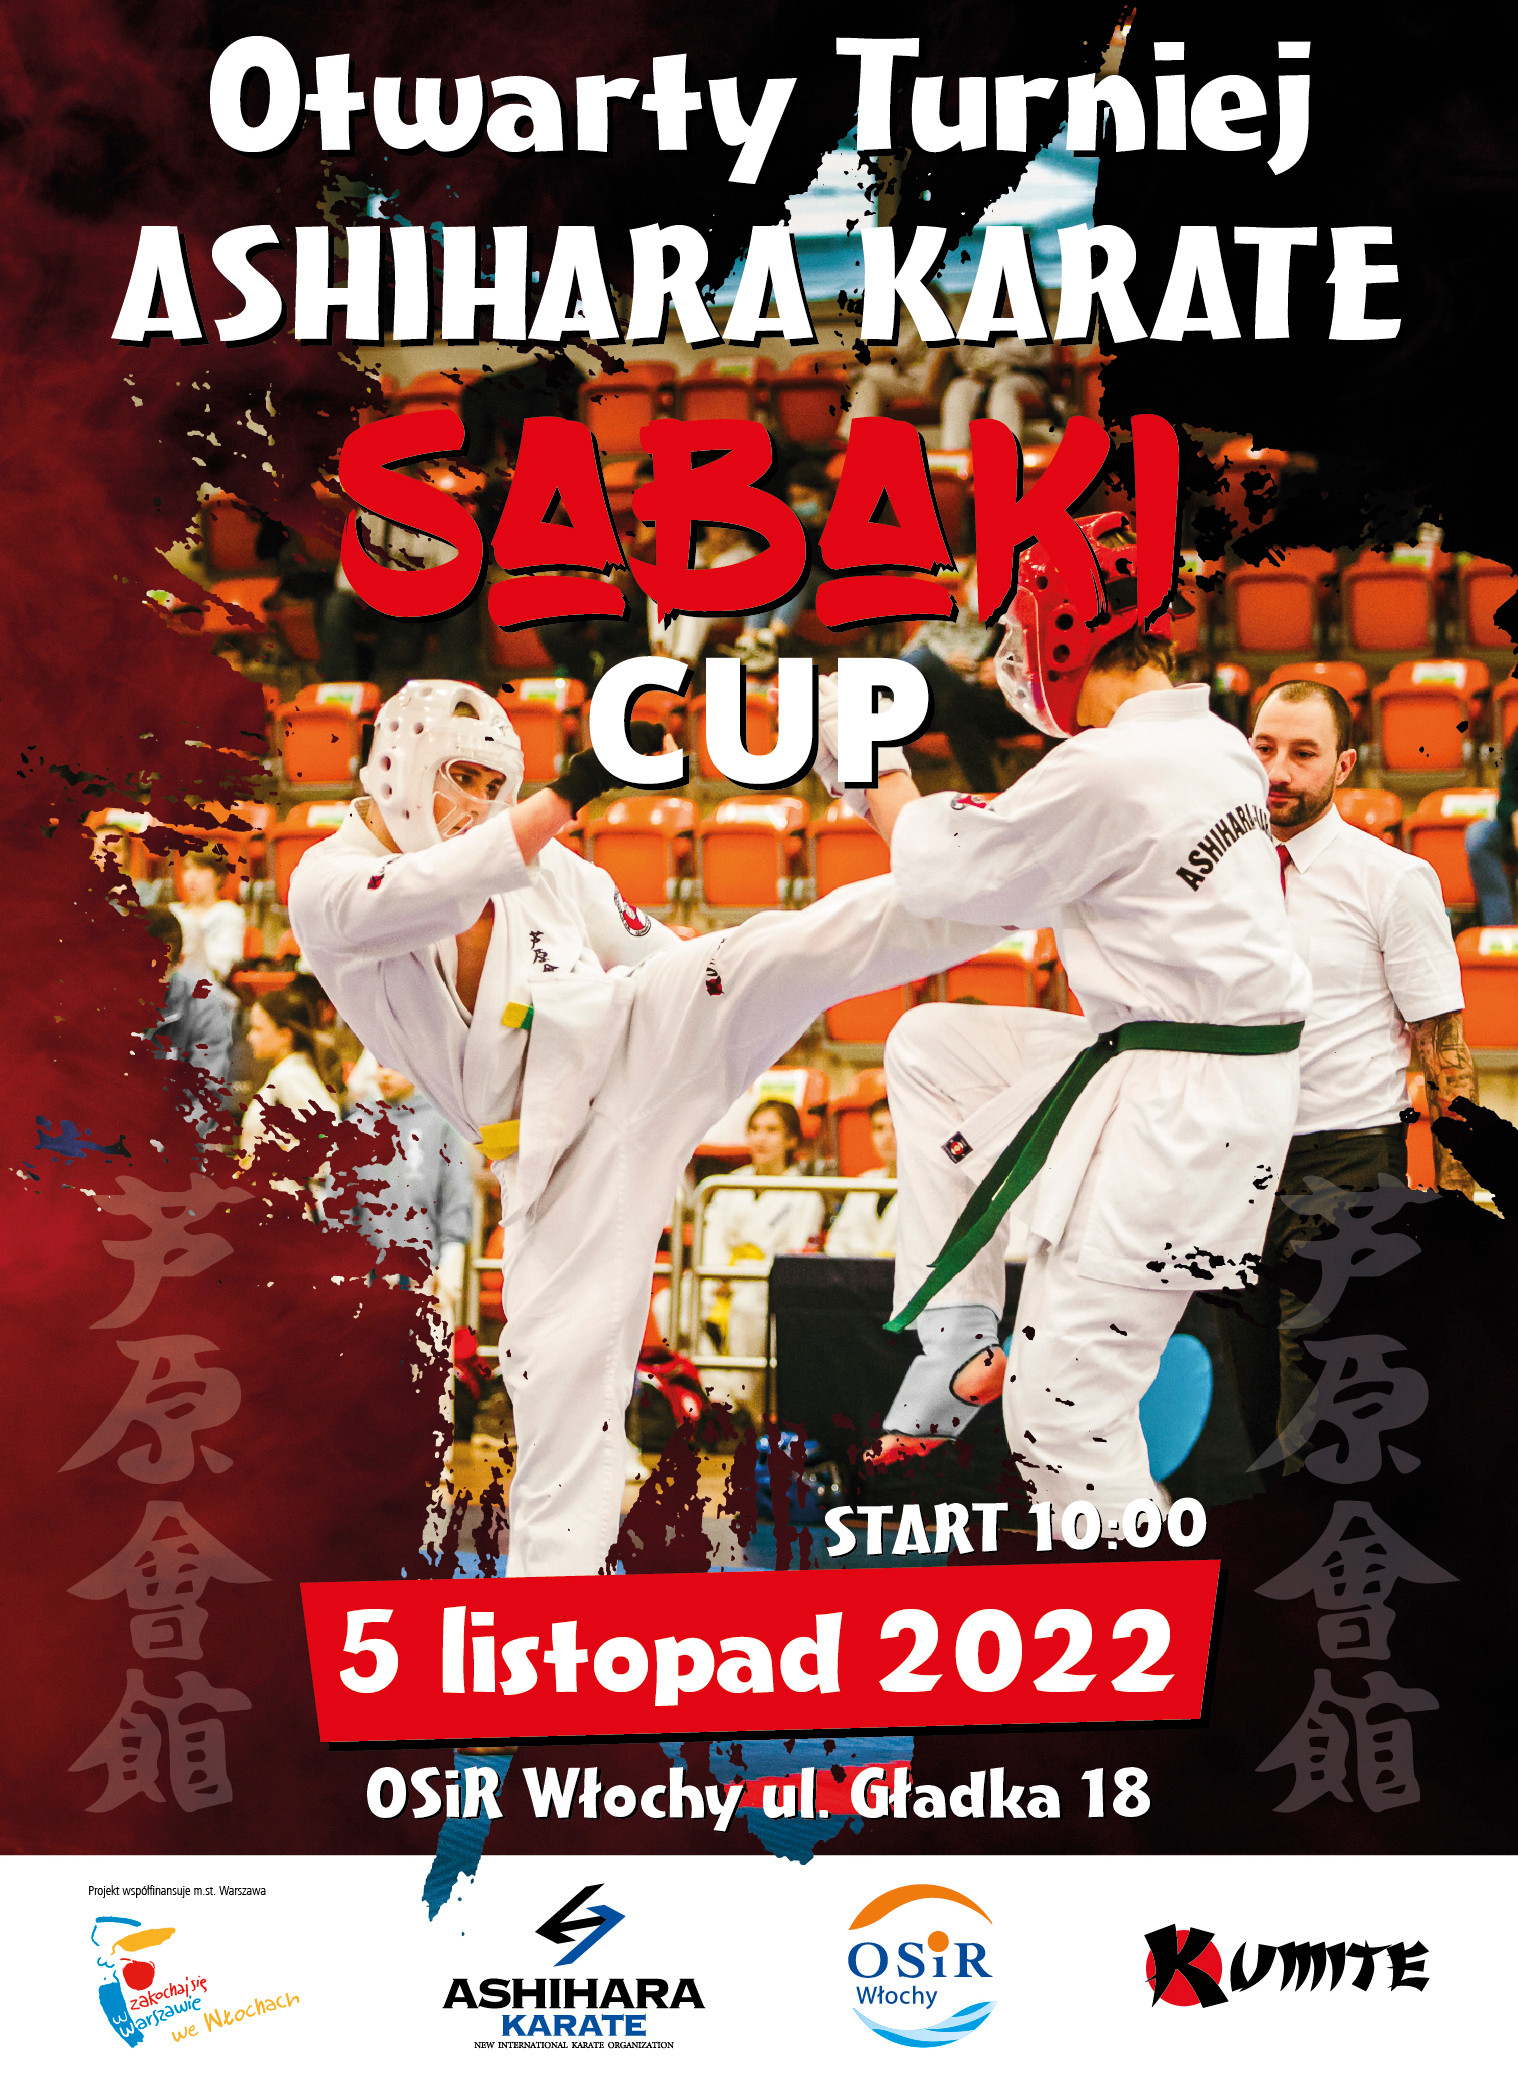 Otwarty Turniej ASHIHARA KARATE SABAKI CUP 5.11.2022